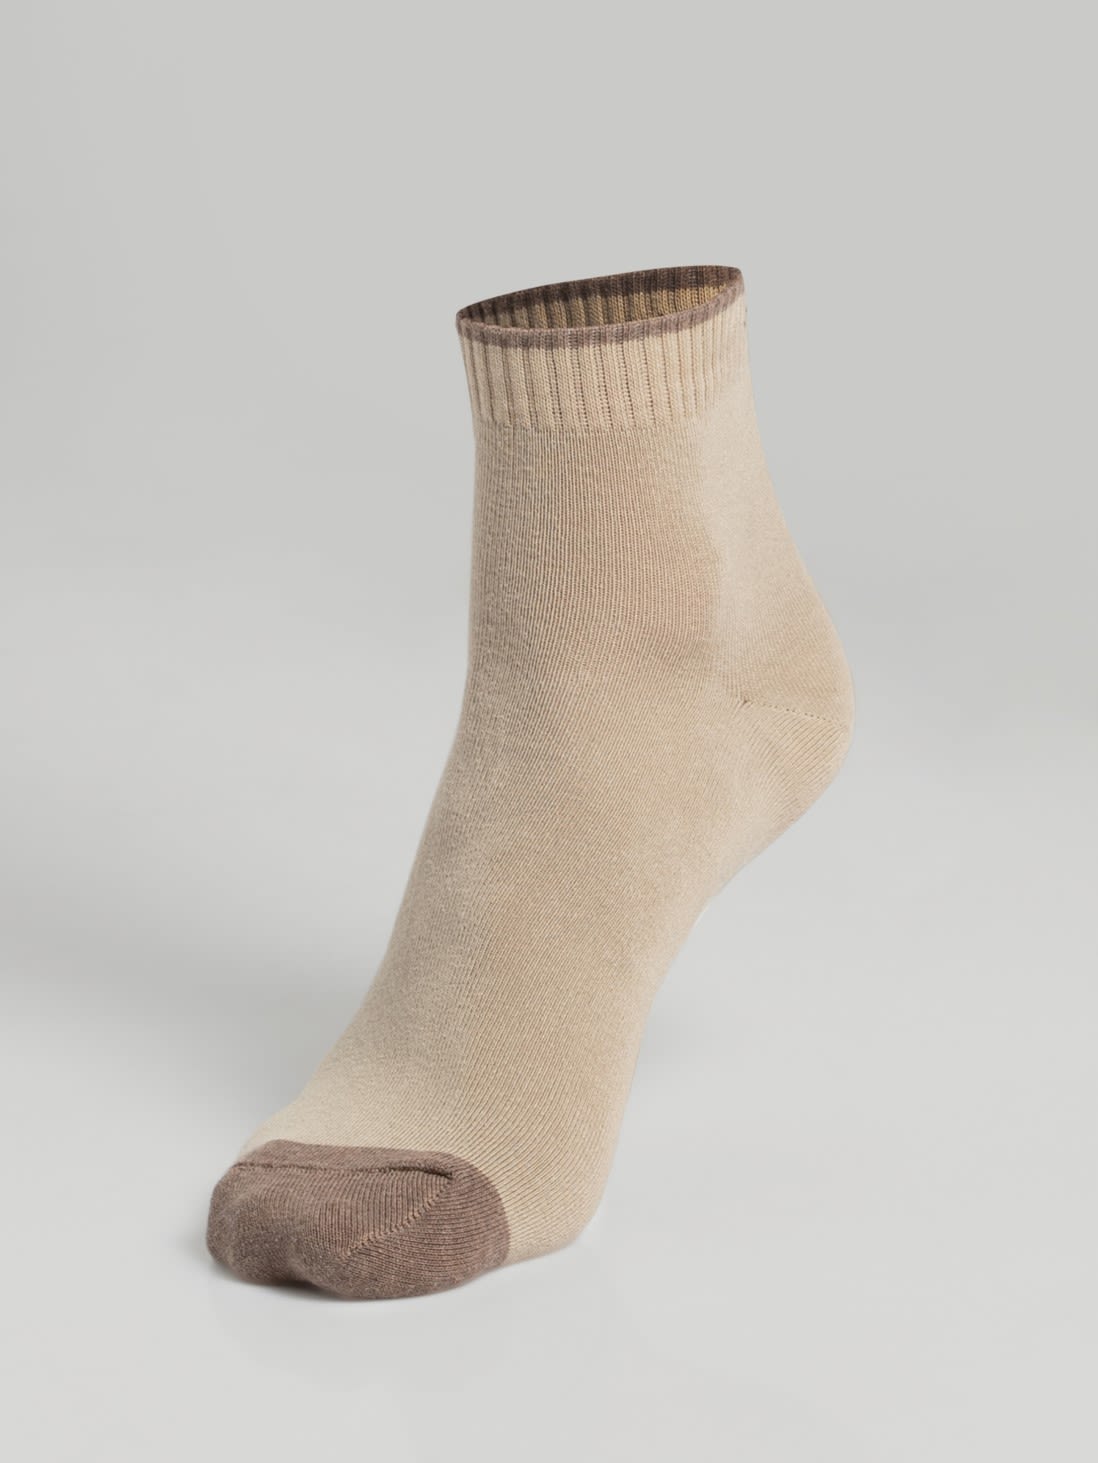 mens tan ankle socks